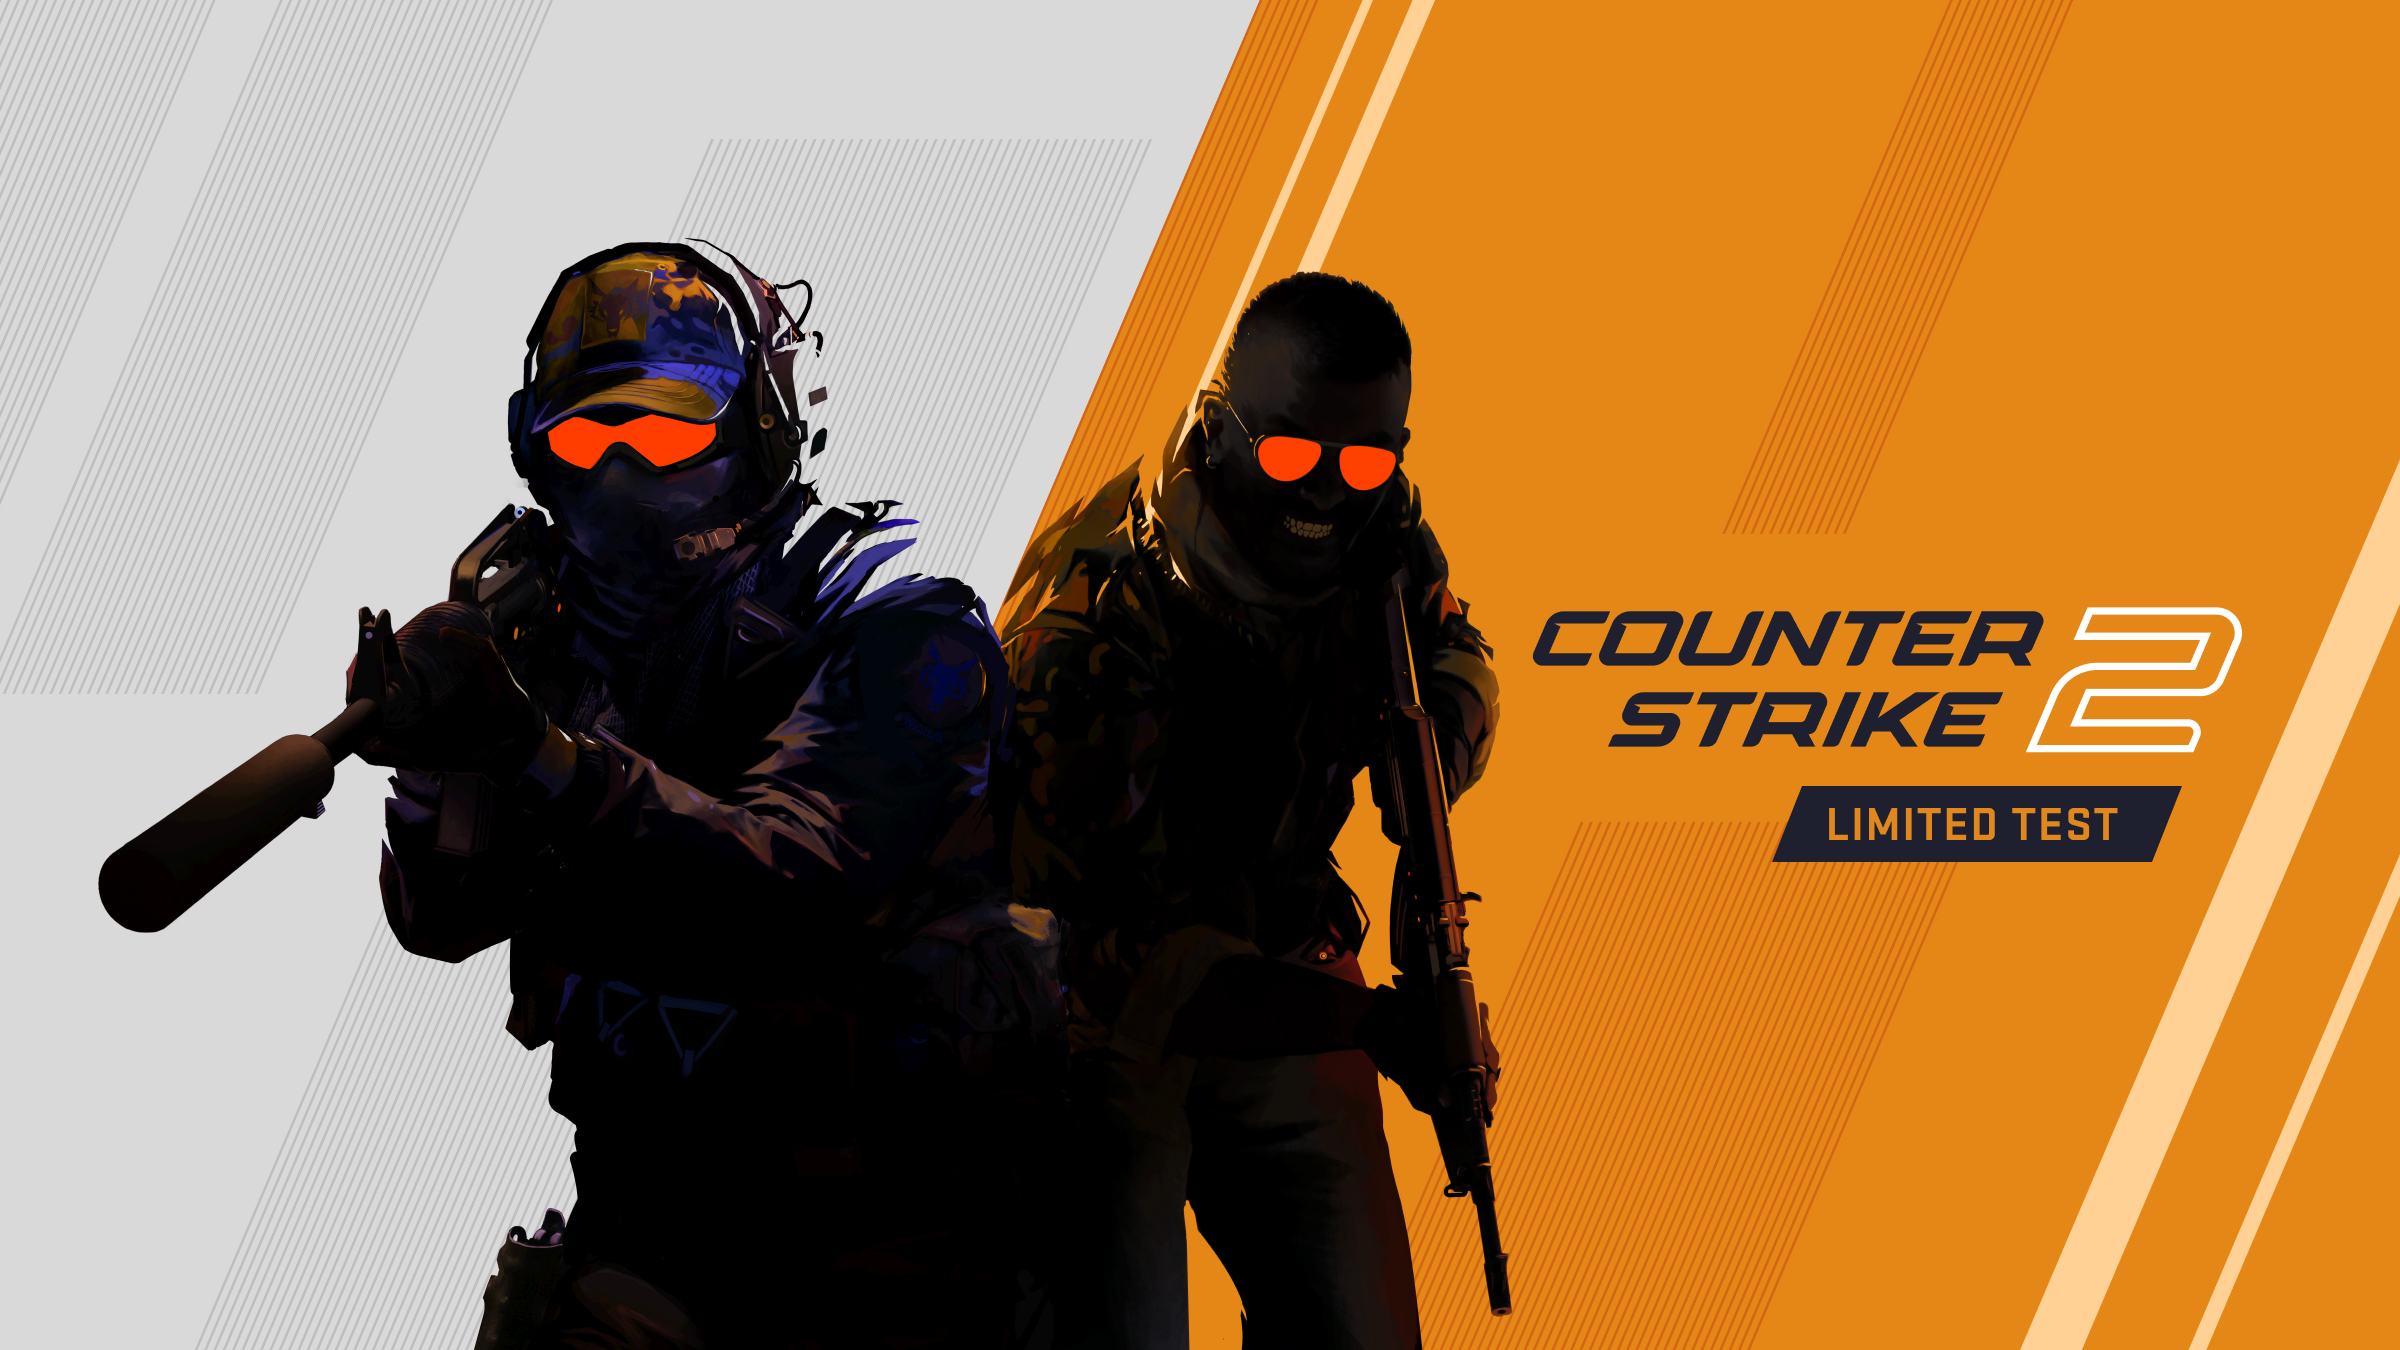 Counter-Strike 2 Limited Test Banner dari Valve.